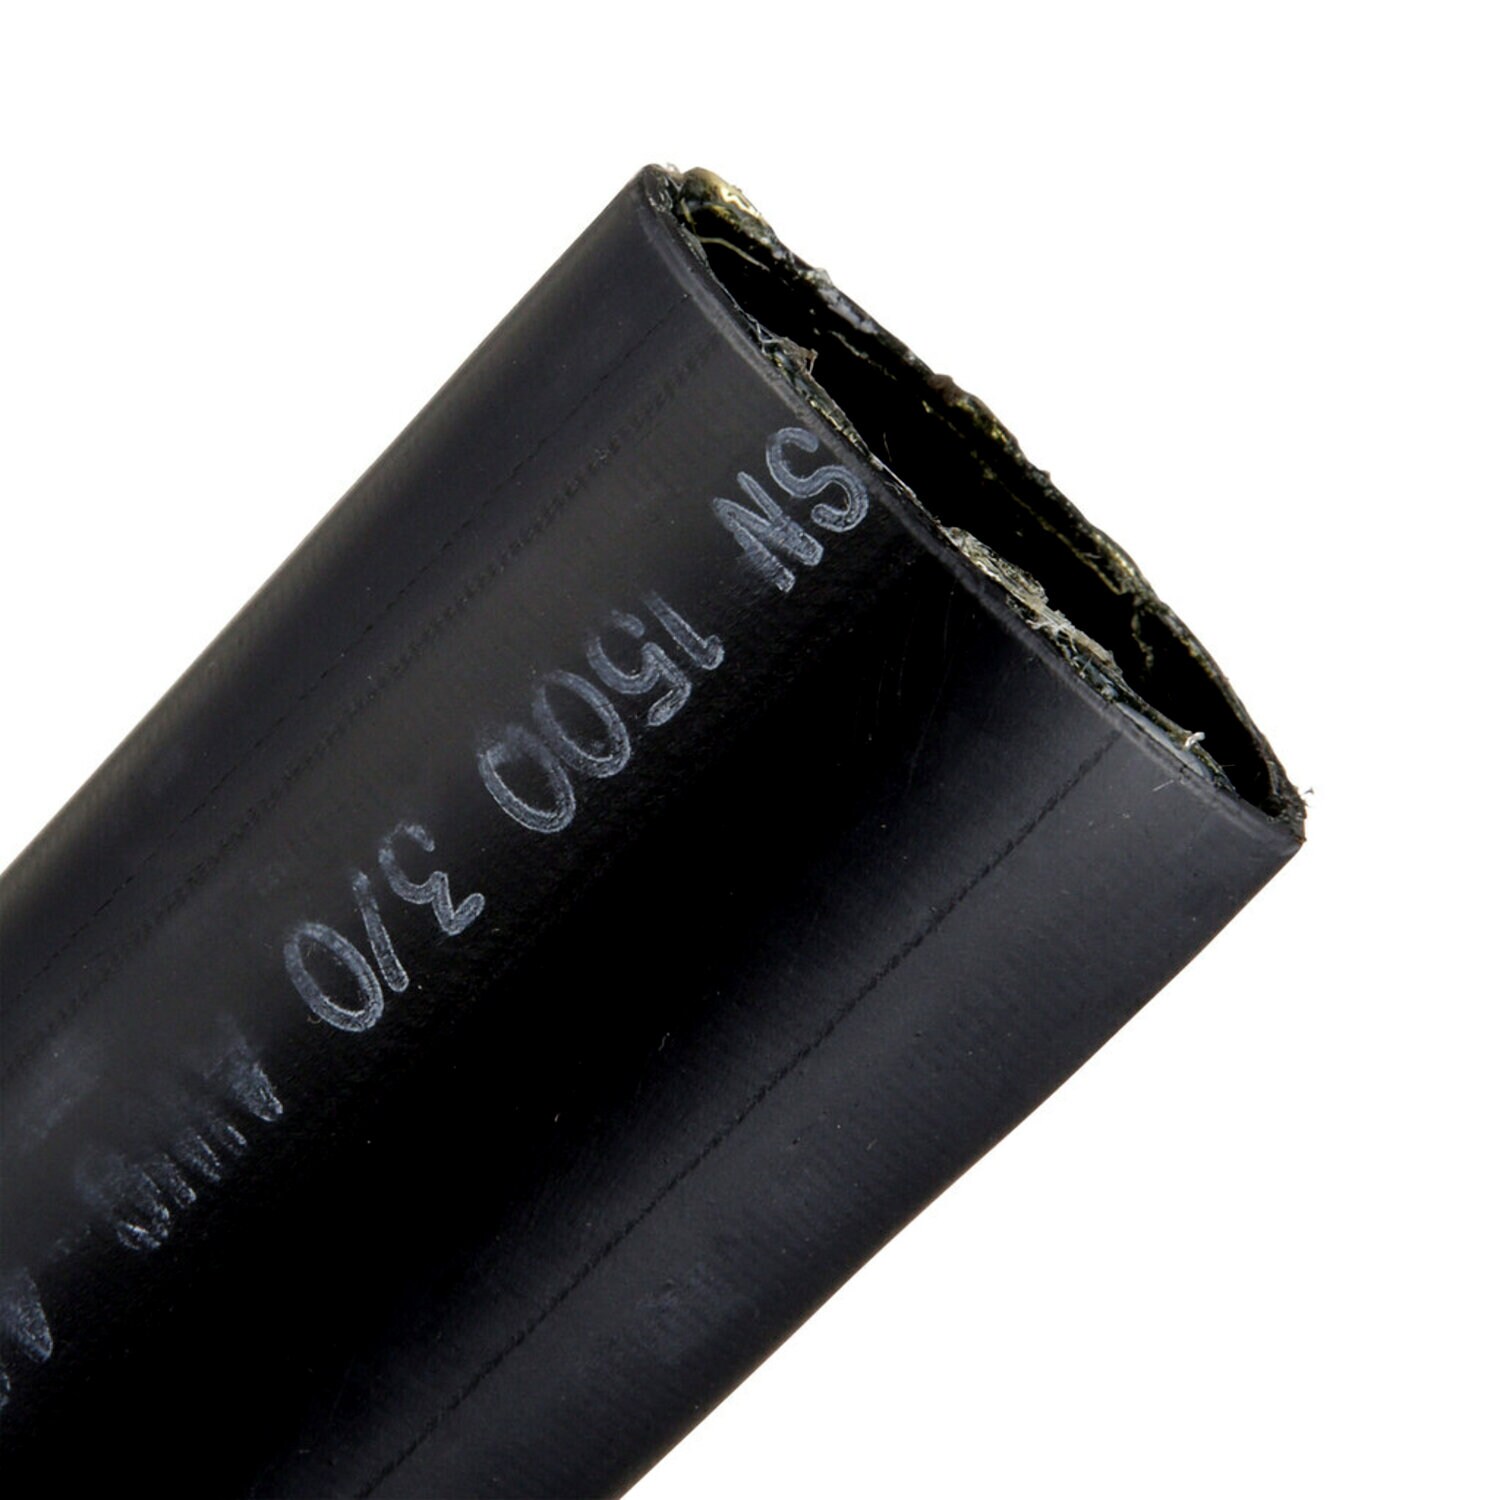 7010397570 - 3M Heat Shrink Heavy-Wall Cable Sleeve ITCSN-1500, Black, 48-Box, Bulk,
50/Case